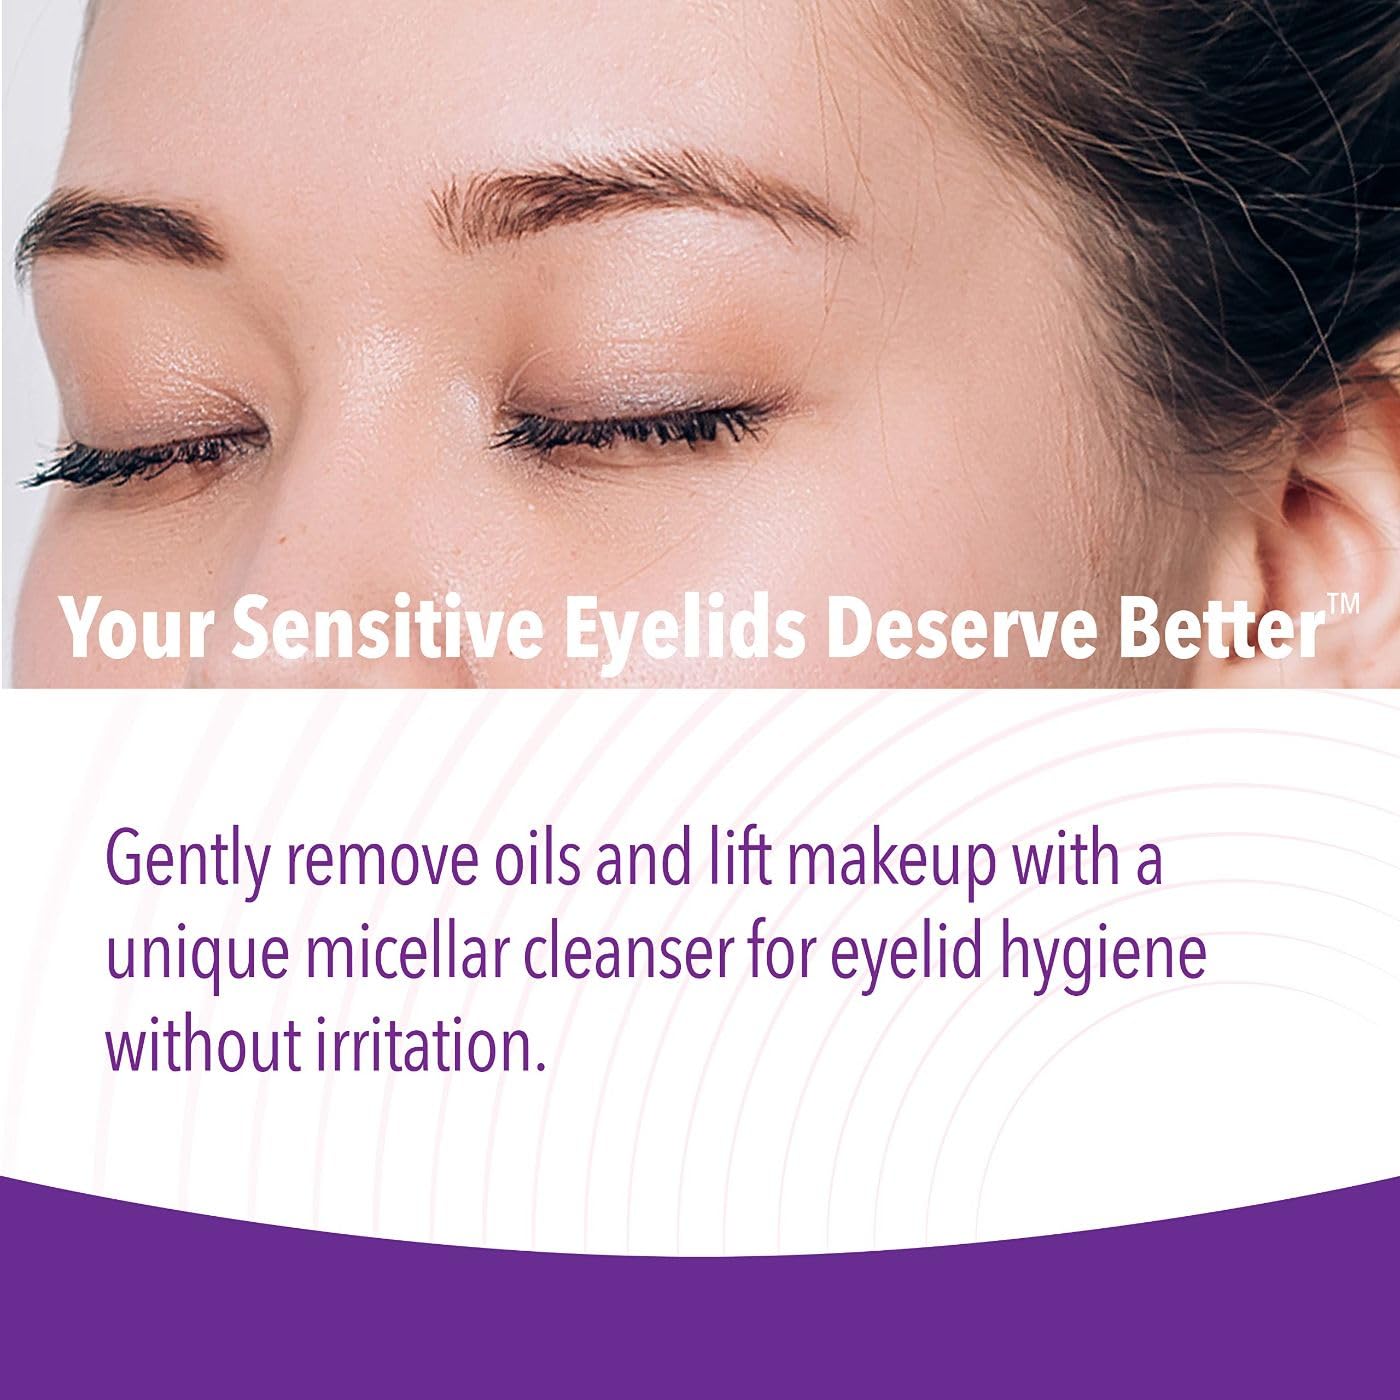 iVIZIA Micellar Eyelid Cleanser for Sensitive Eyelid Cleansing, BAK-Preservative-Free, Rinse-Free, Gently Removes Makeup, 3.3fl oz Bottle